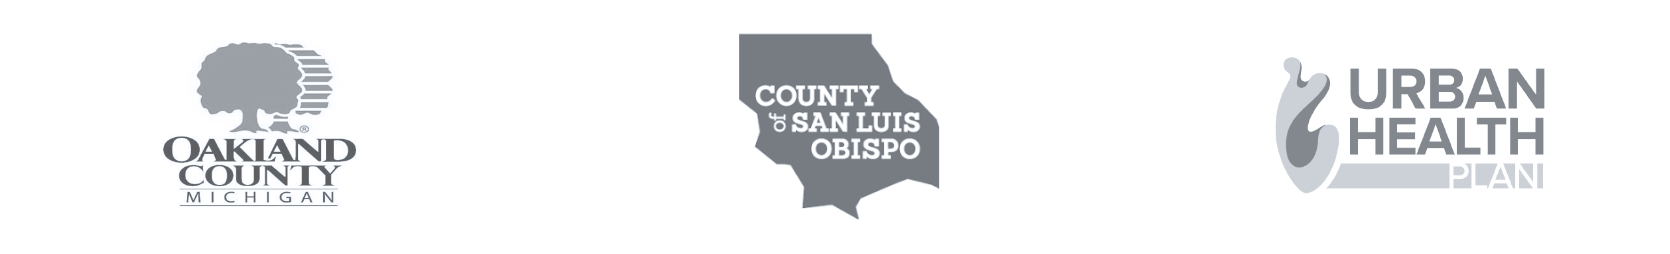 Oakland County, San Luis Obispo County, Urban Health Plan